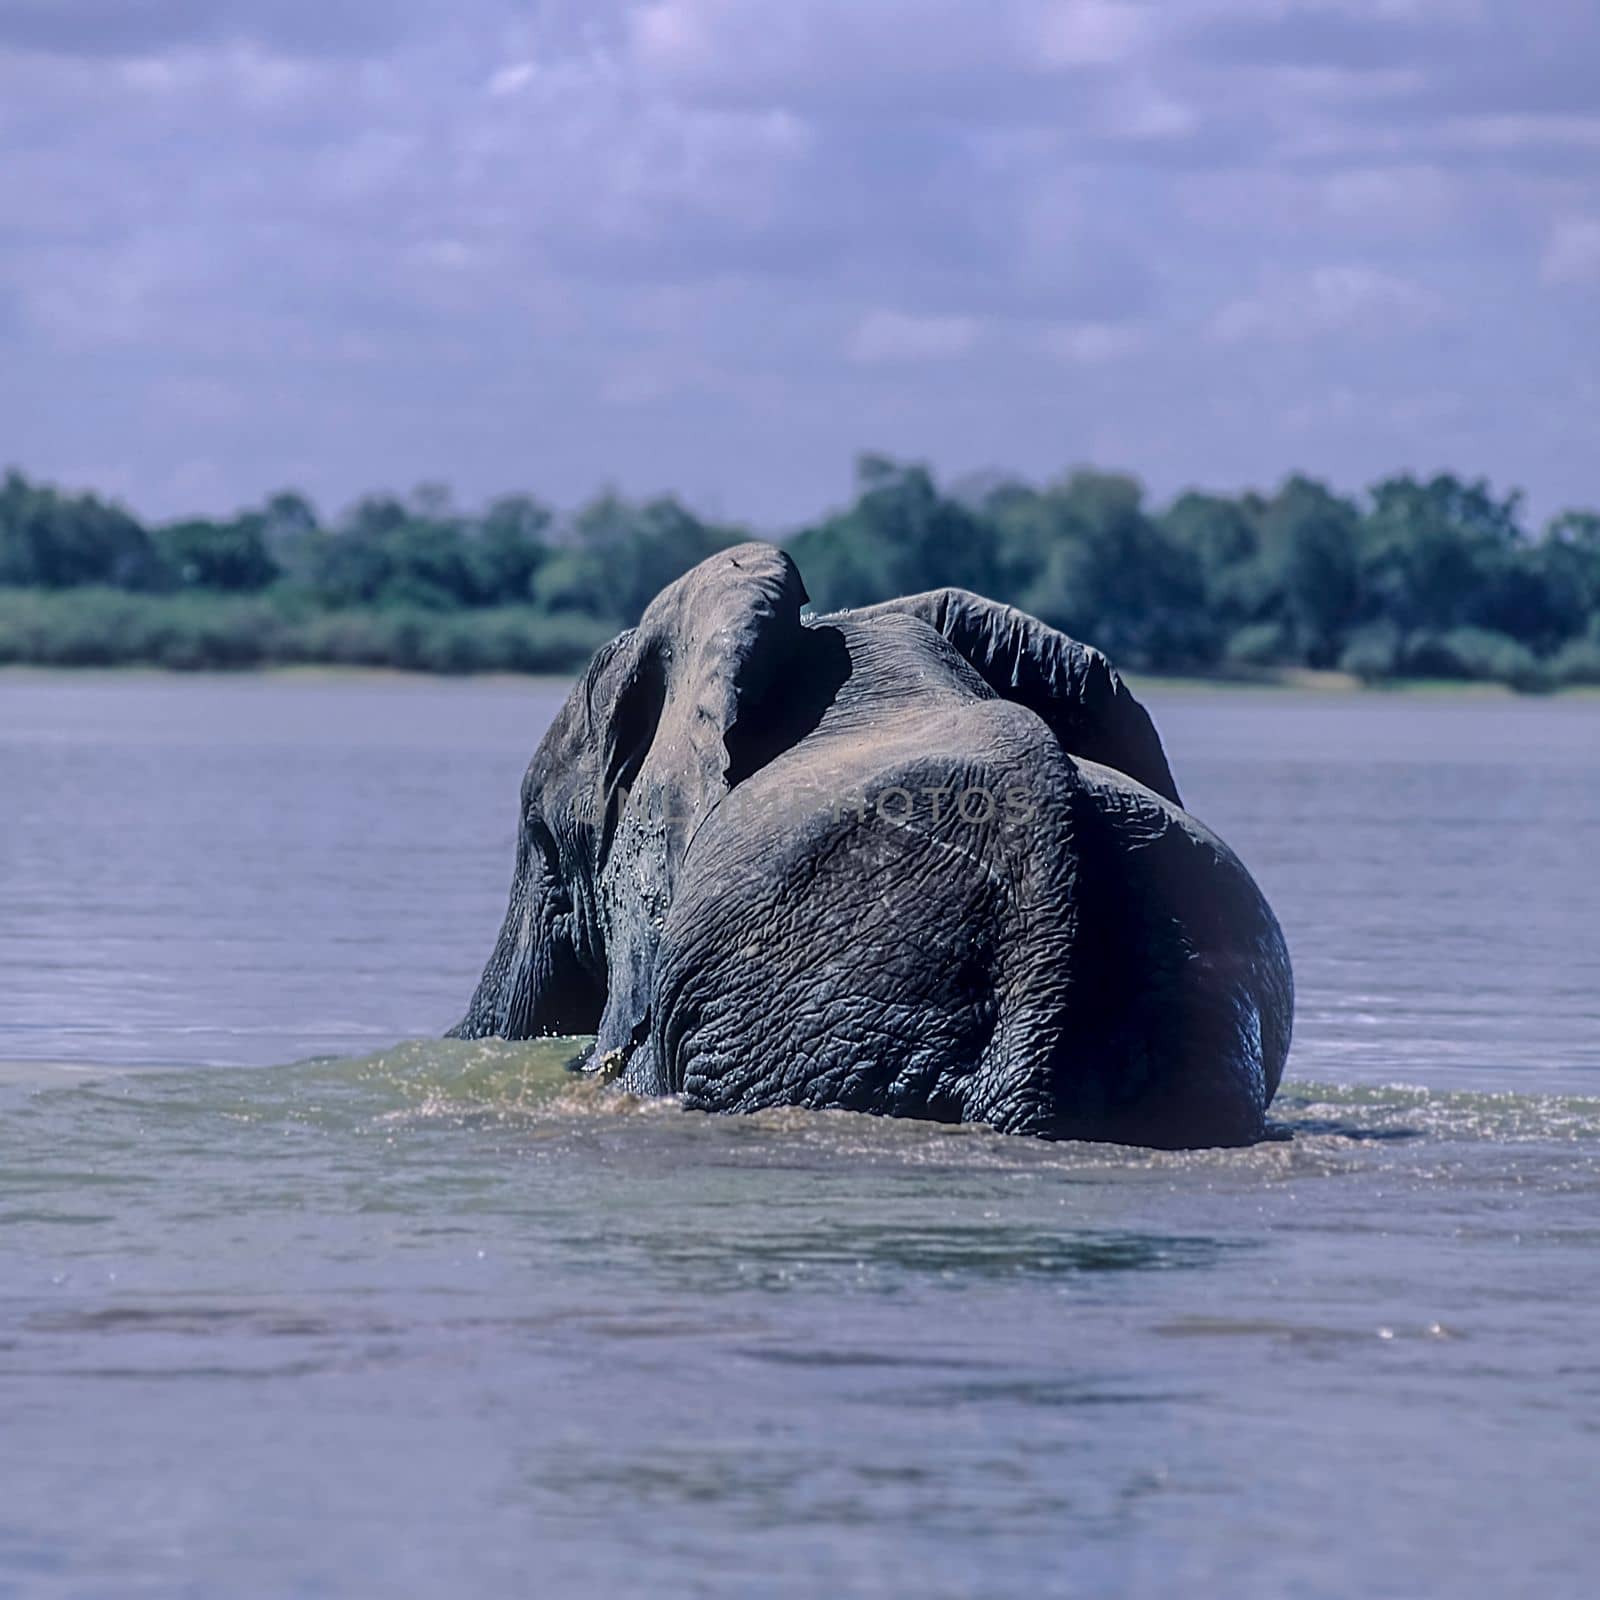 Elephant by Giamplume